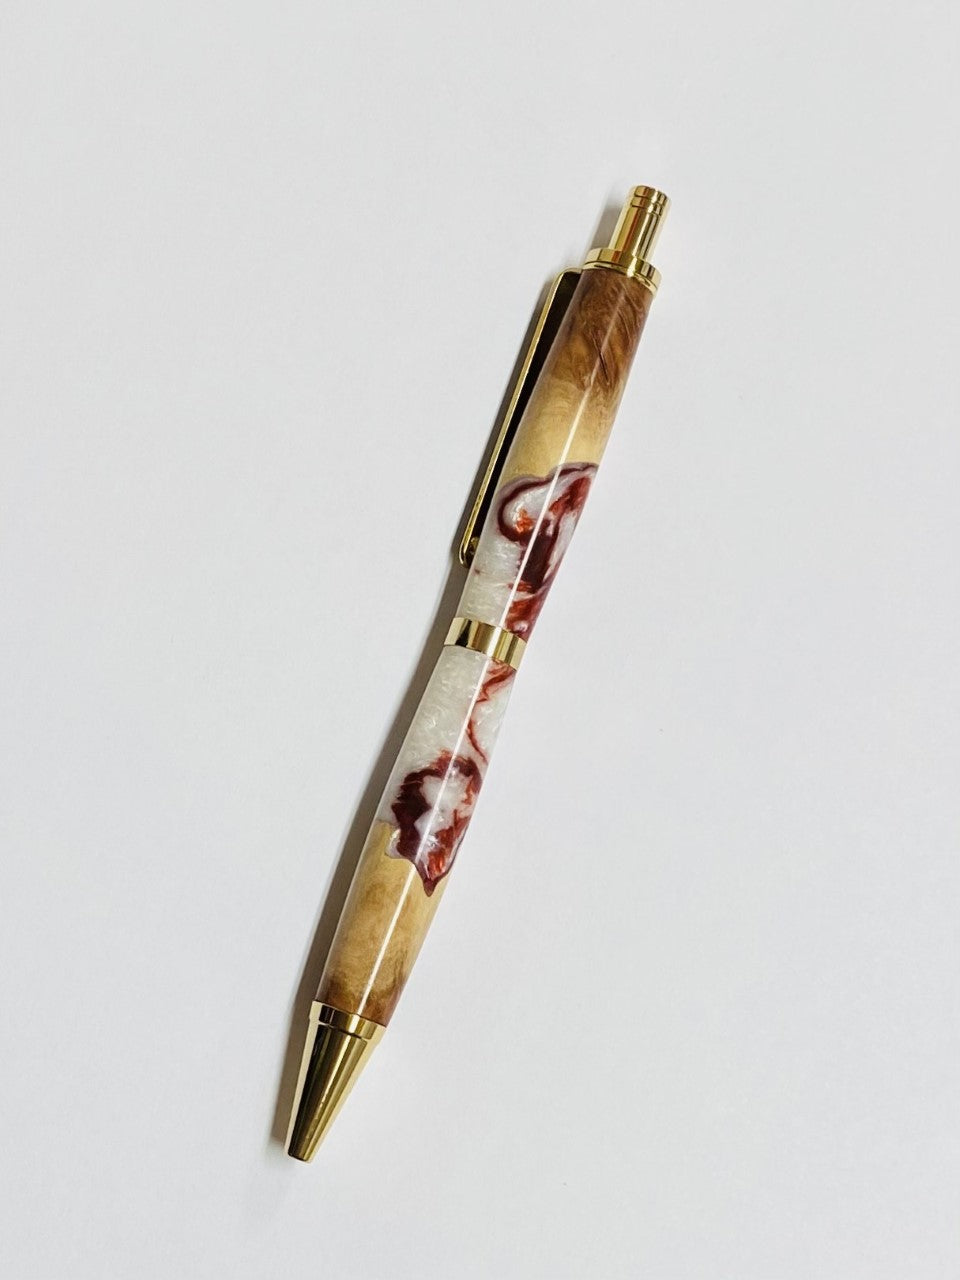 Candy Cane Pen #4